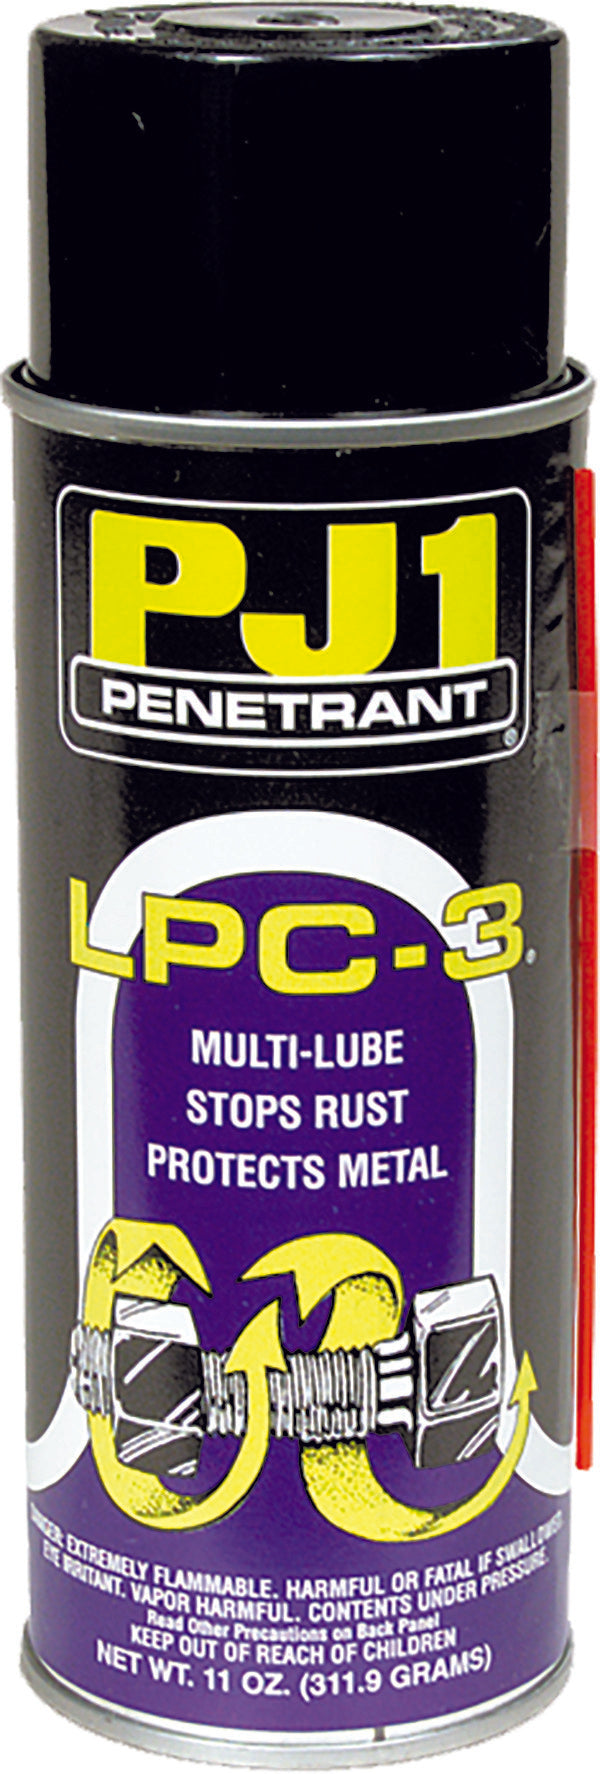 PJ1 Lpc-3 Penetrant/Lubricant 11oz 12-11